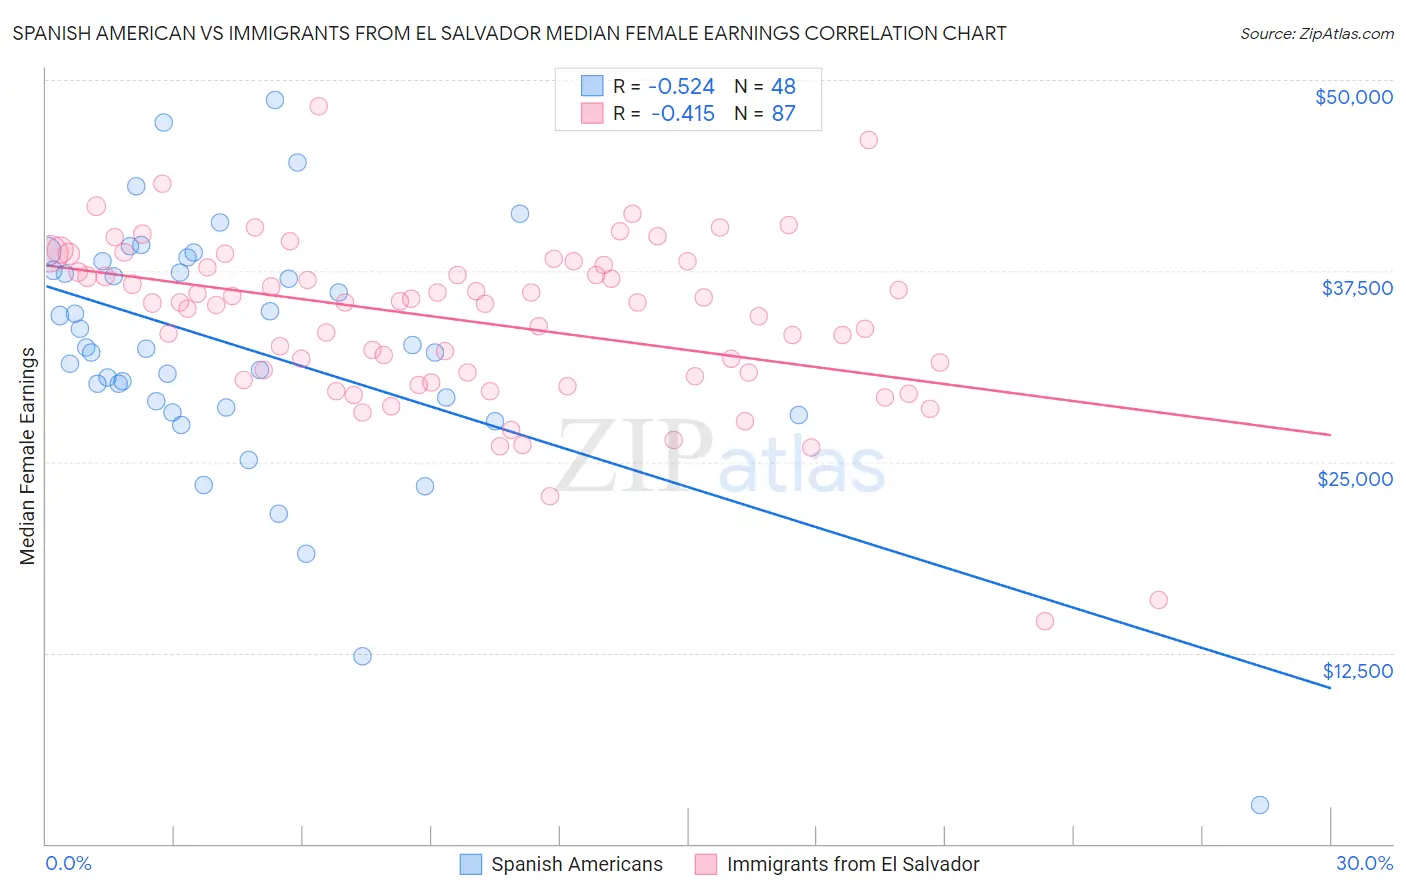 Spanish American vs Immigrants from El Salvador Median Female Earnings